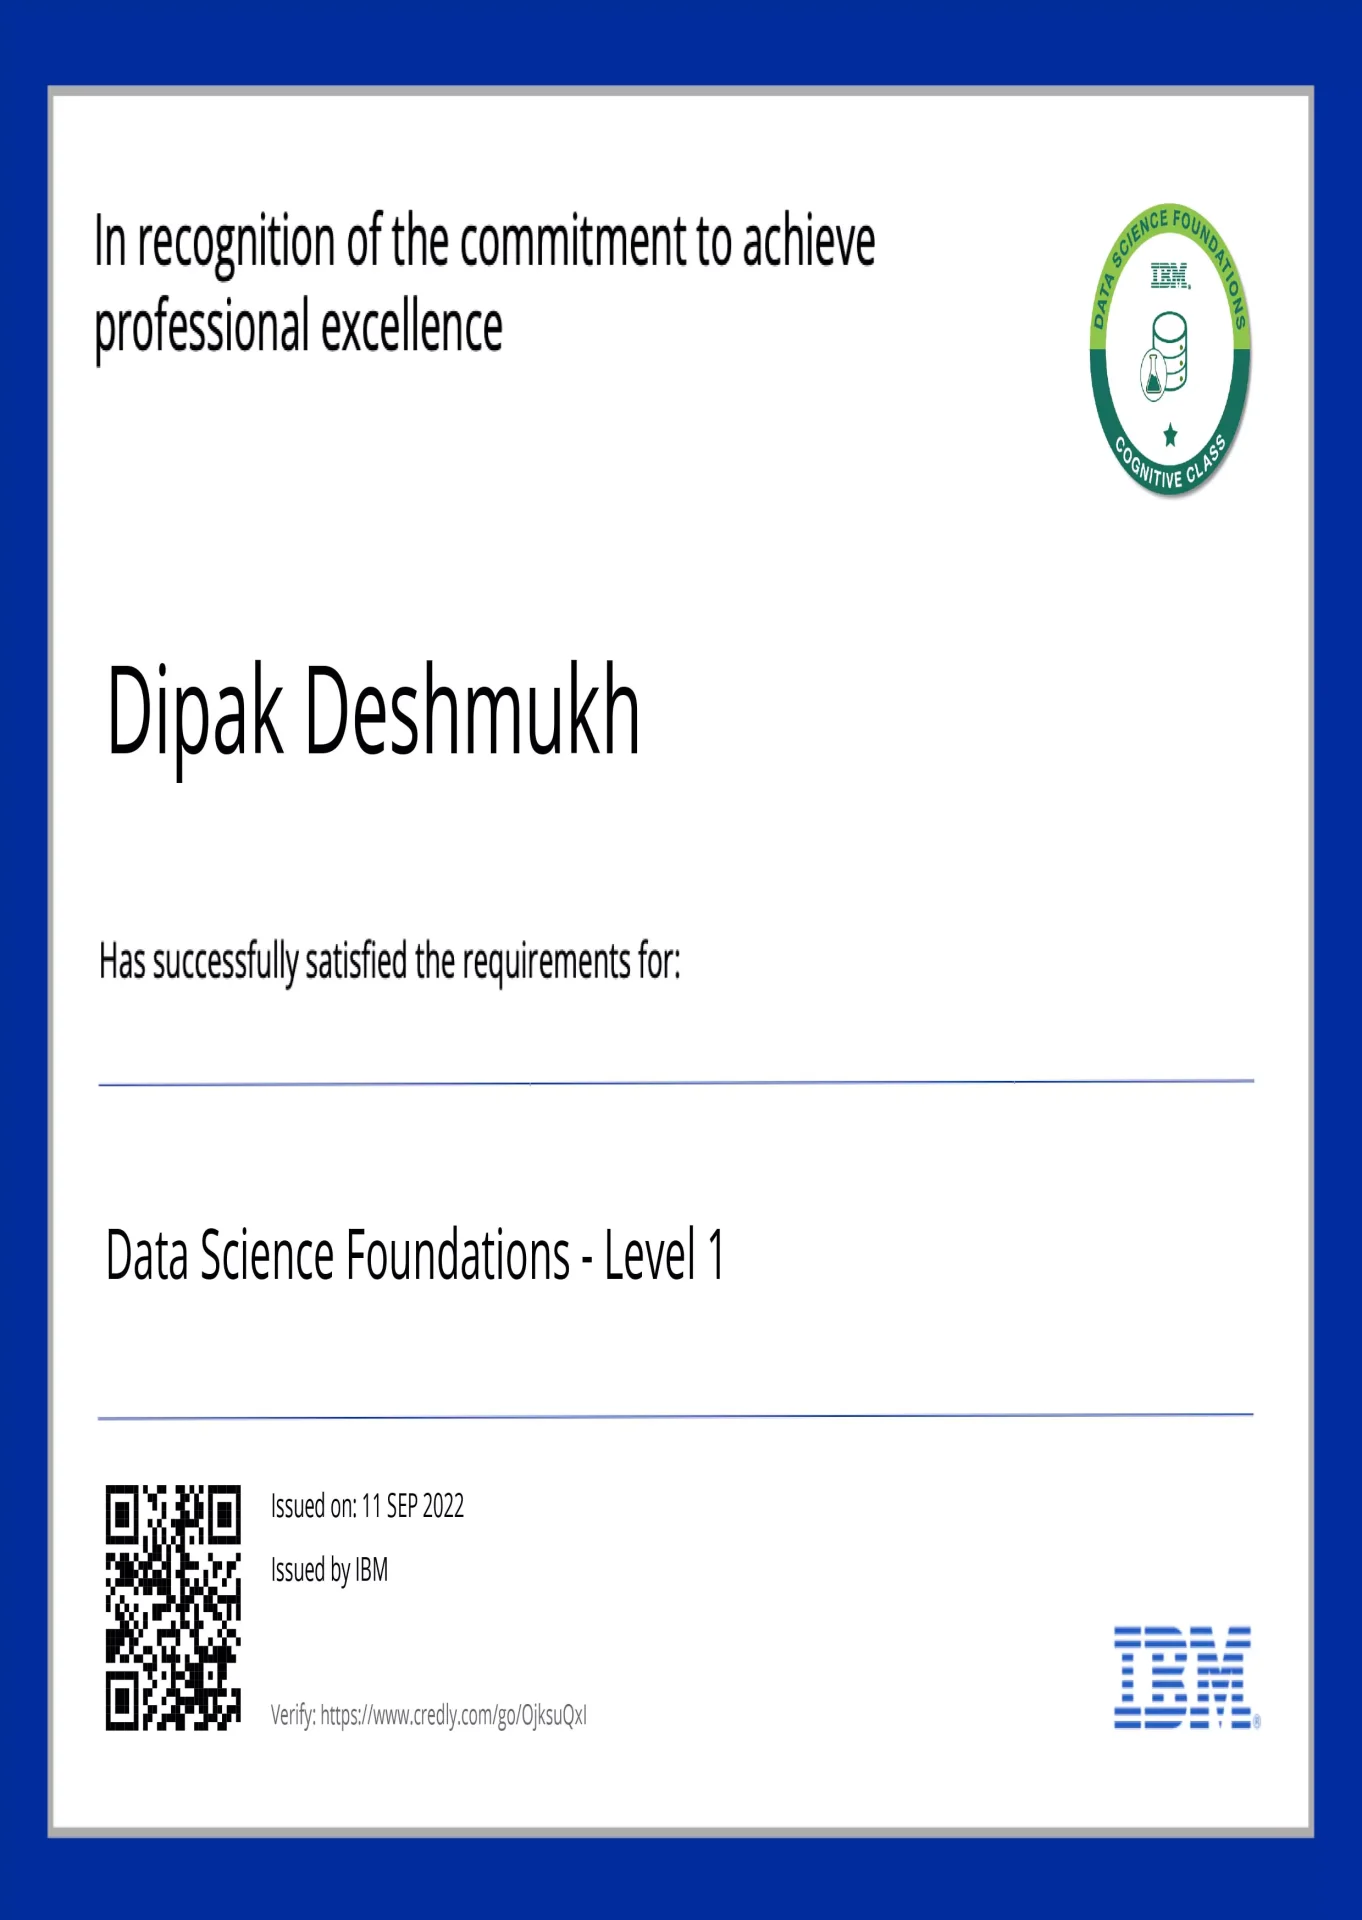 data-science-foundations-level-1-badge20230424-28-1hs1j57